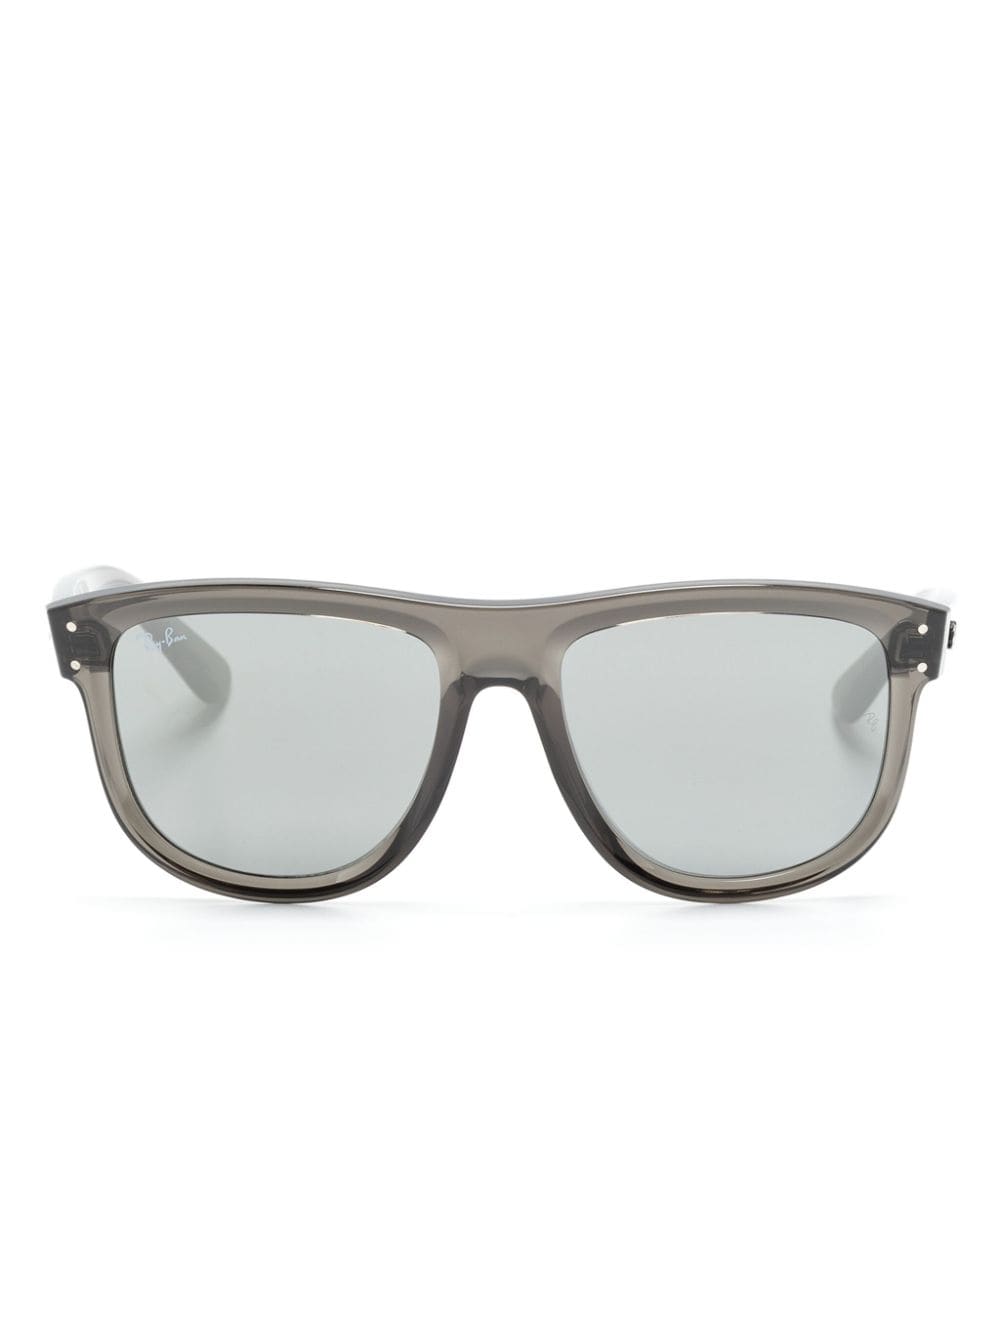 Ray-Ban Boyfriend Reverse square-frame sunglasses - Grey von Ray-Ban